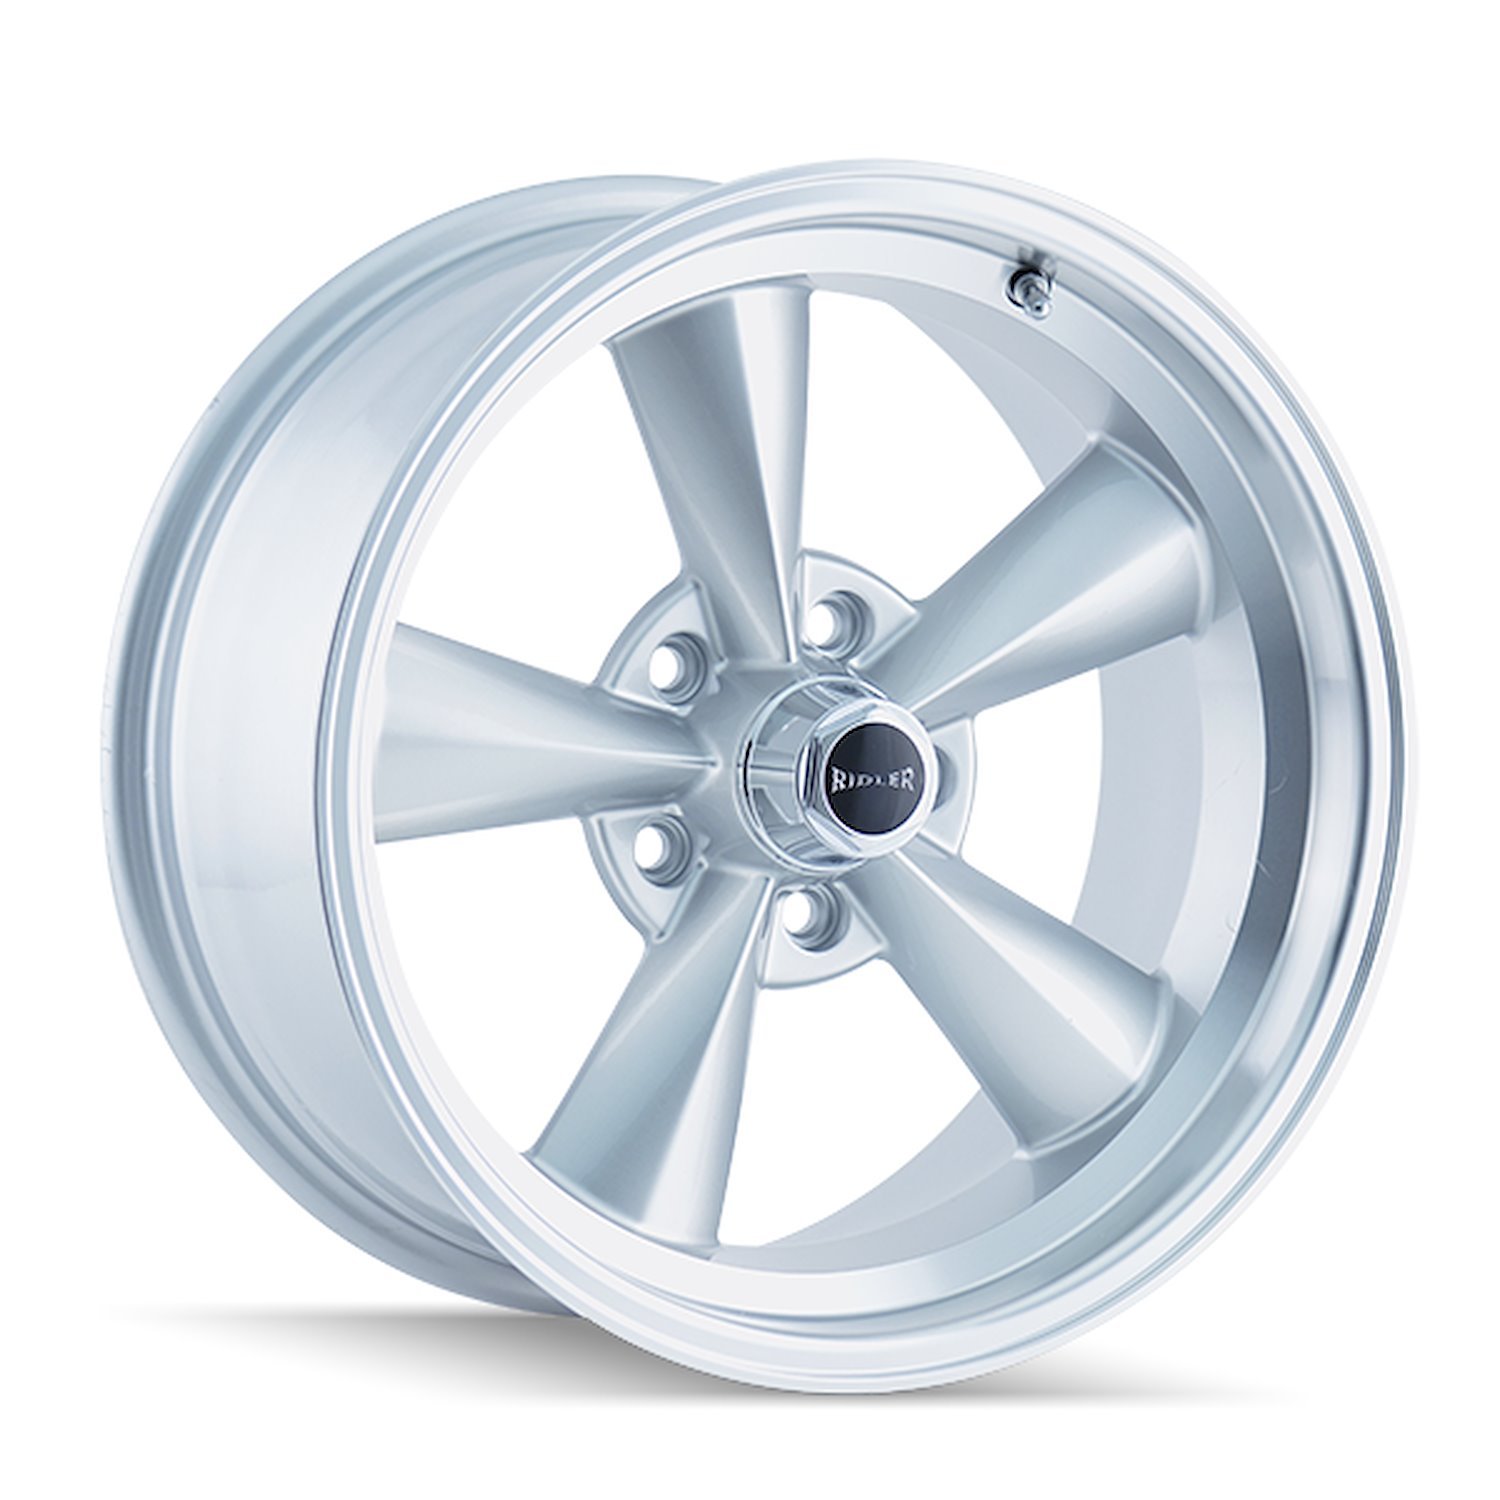 675-7865S 675-Series Wheel [Size: 17" x 8"] Satin Silver Machined Finish